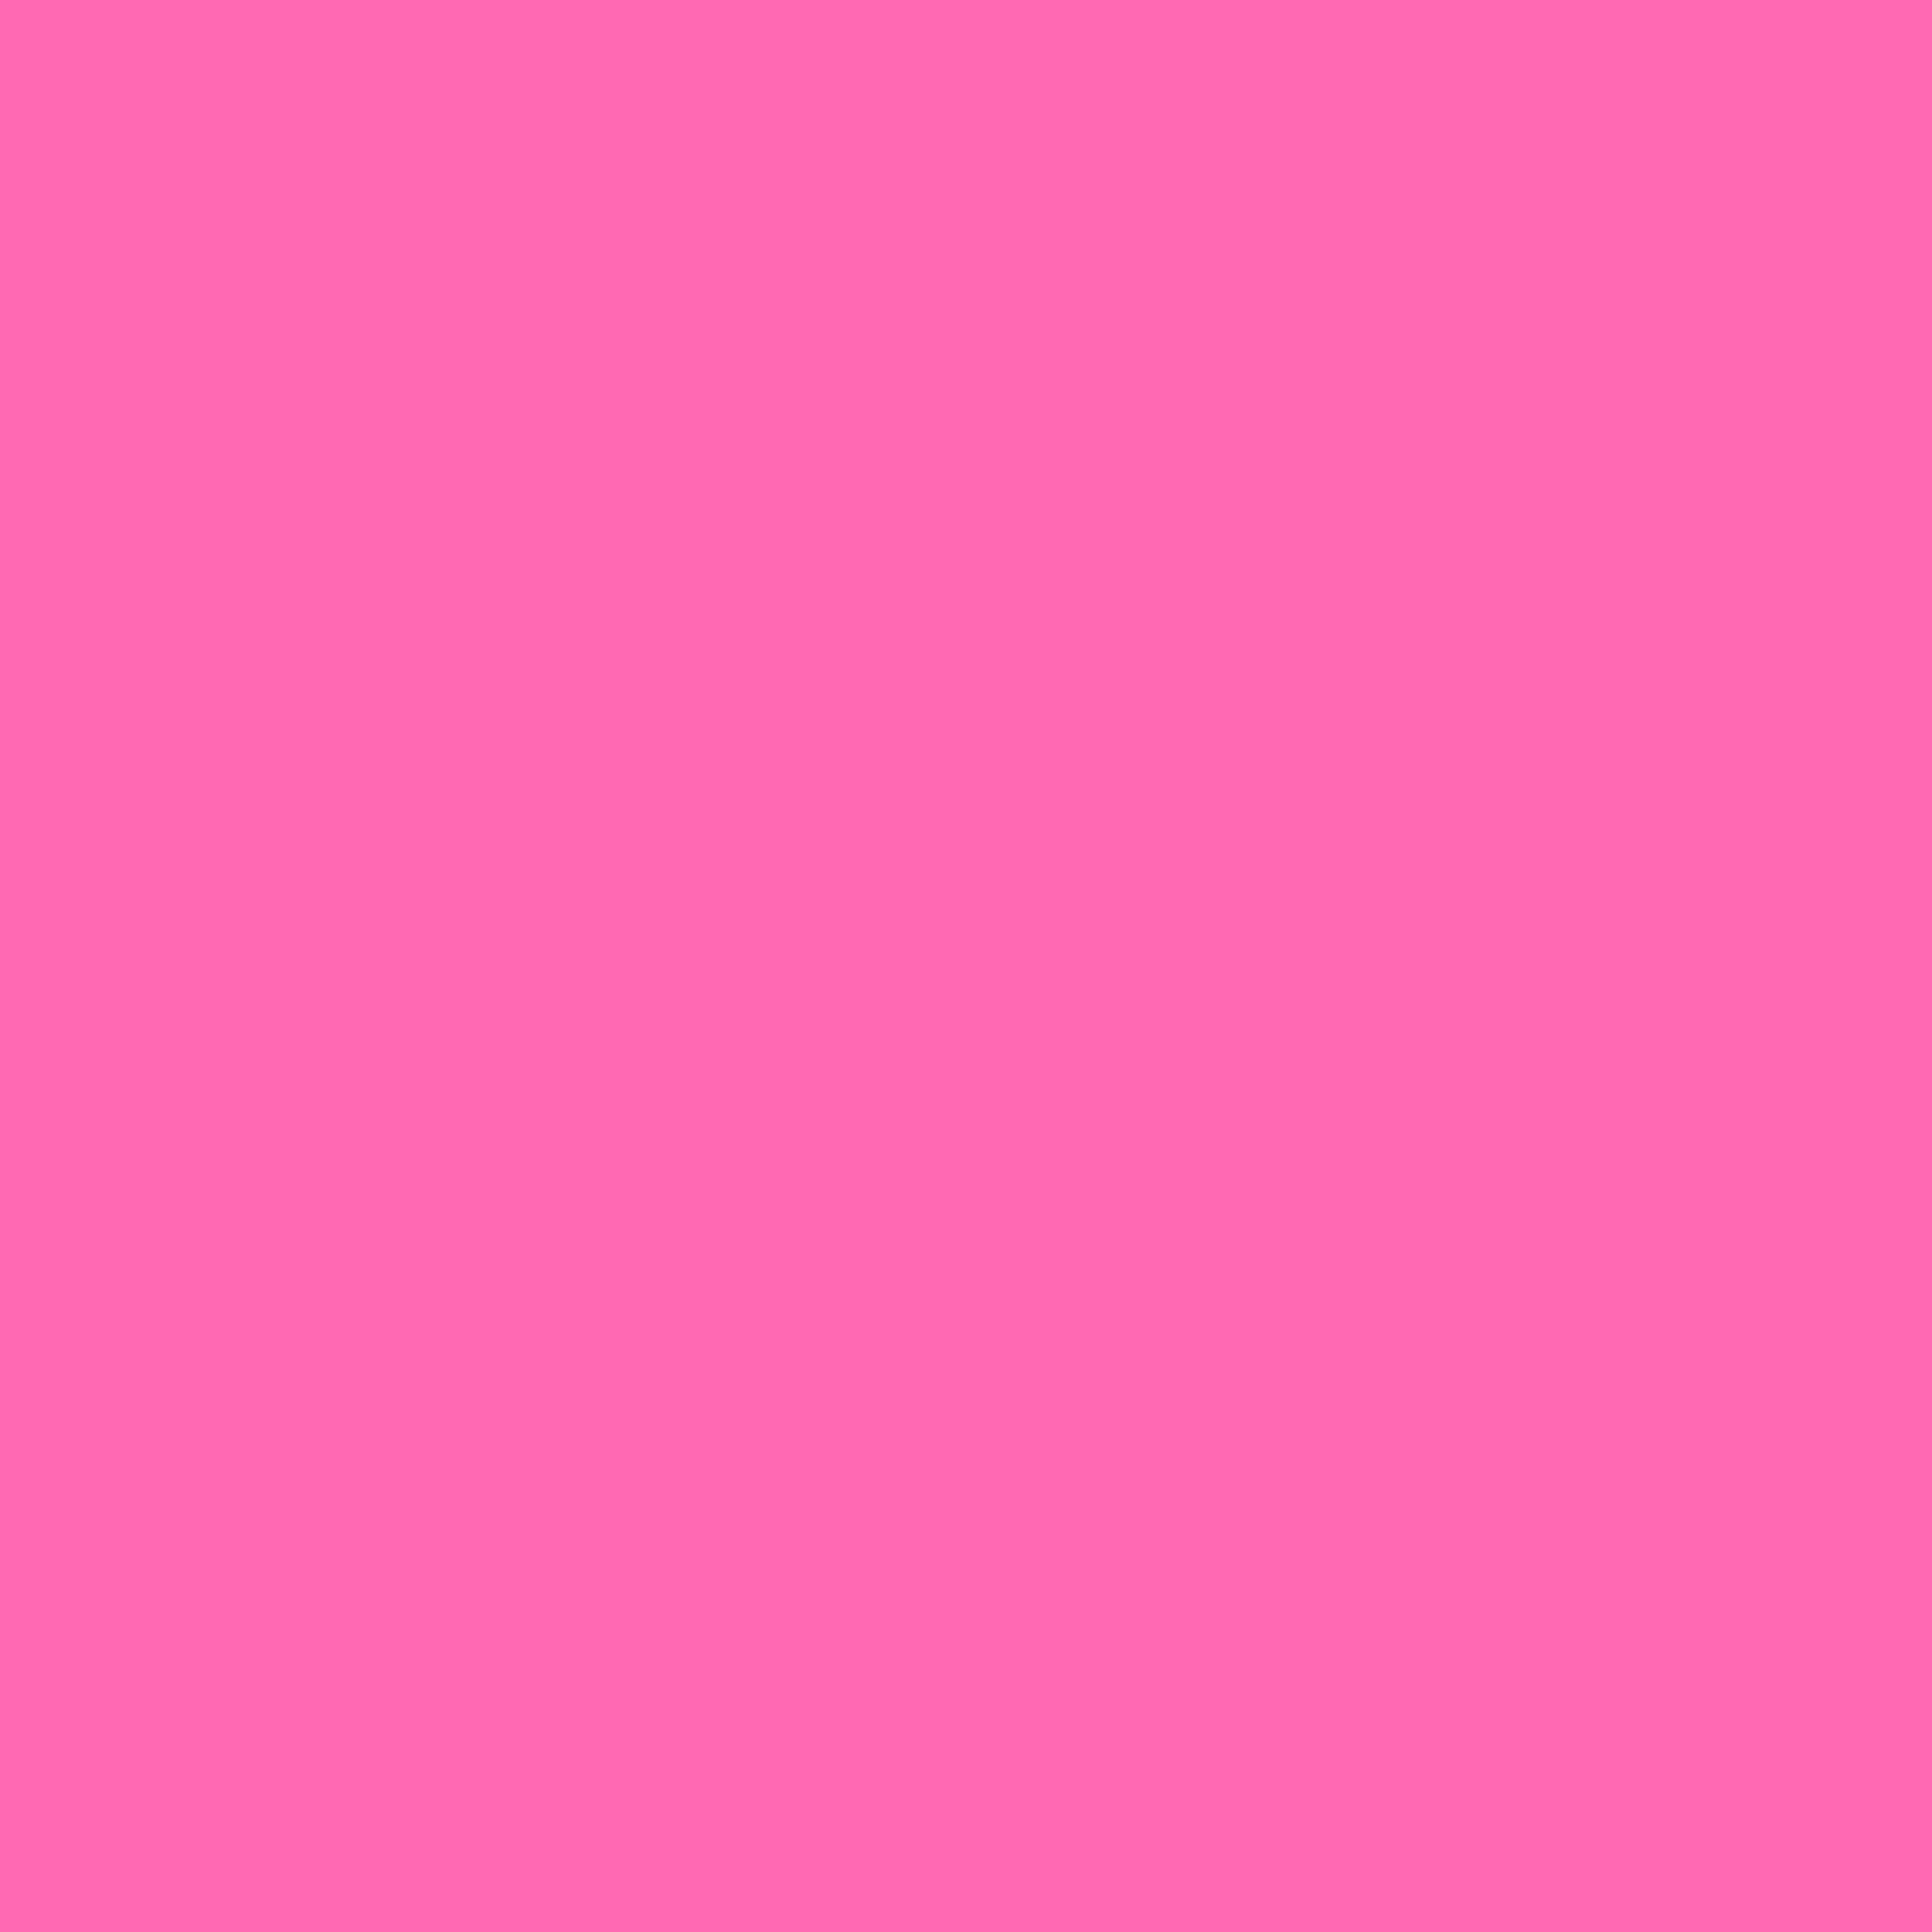 Pink Background Hot Solid Color